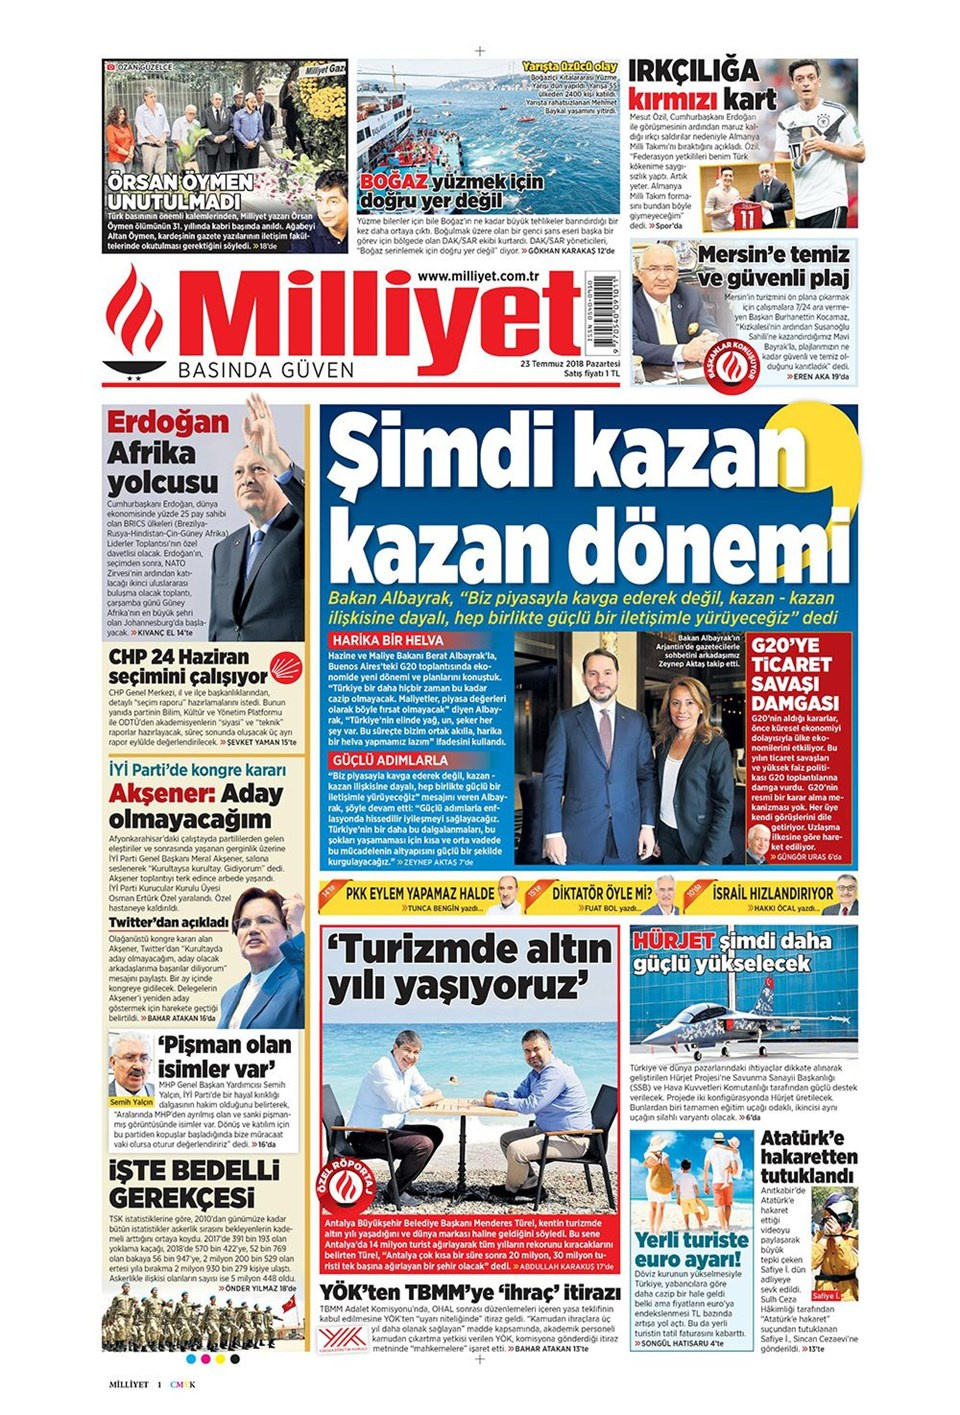 Gazete manşetleri 23 Temmuz 2018 Hürriyet - Posta - Sabah